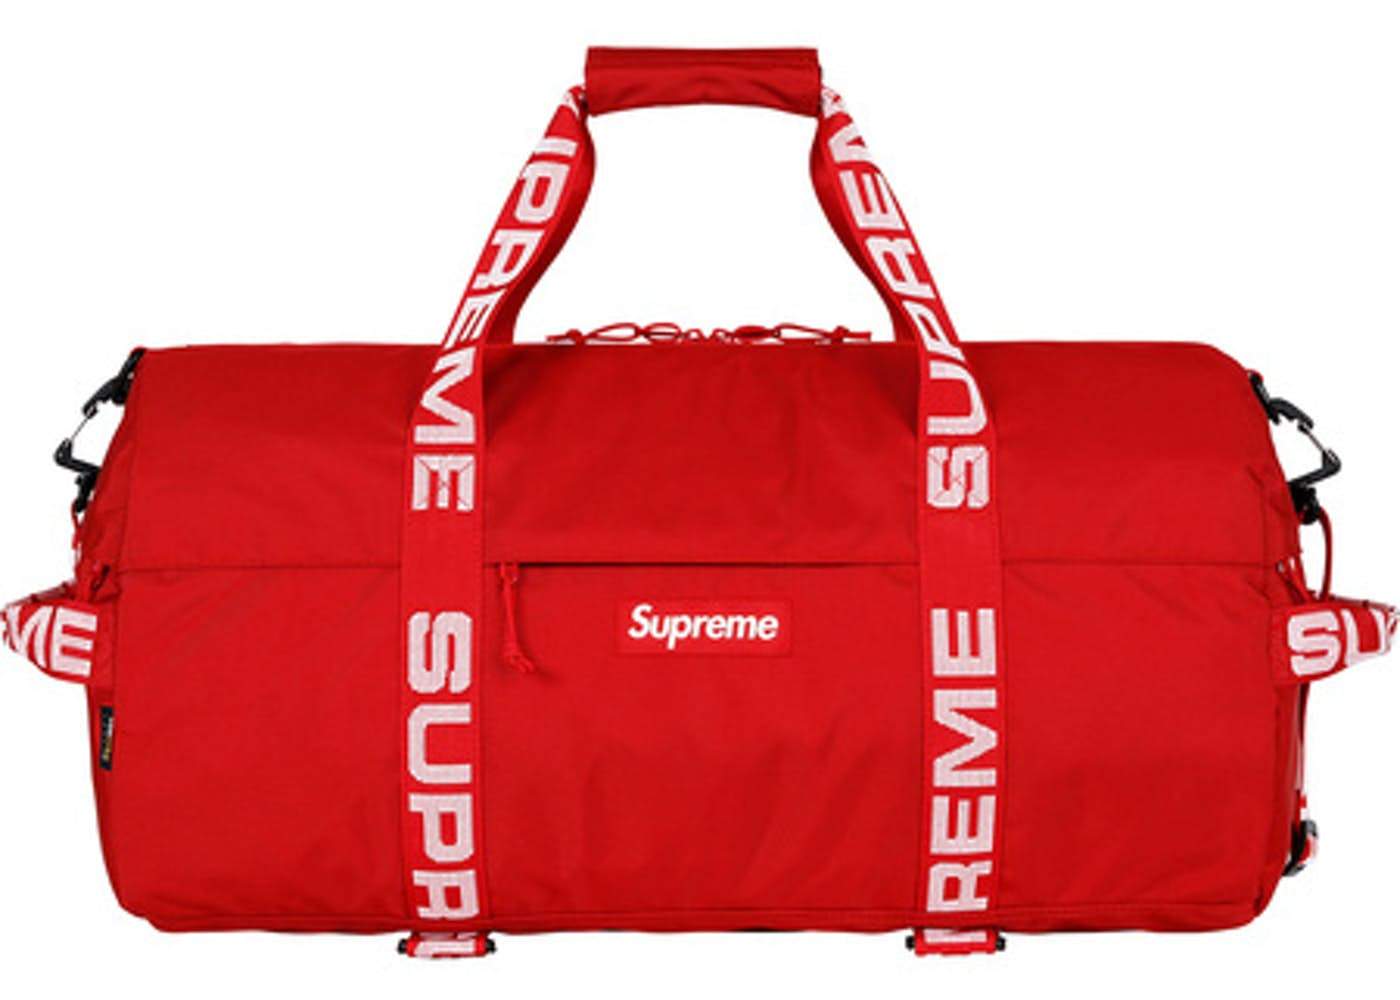 Сумка supreme. Сумка Supreme ss18. Сумка Duffle Bag. Sport Bag Supreme. Спортивная сумка Суприм красная.